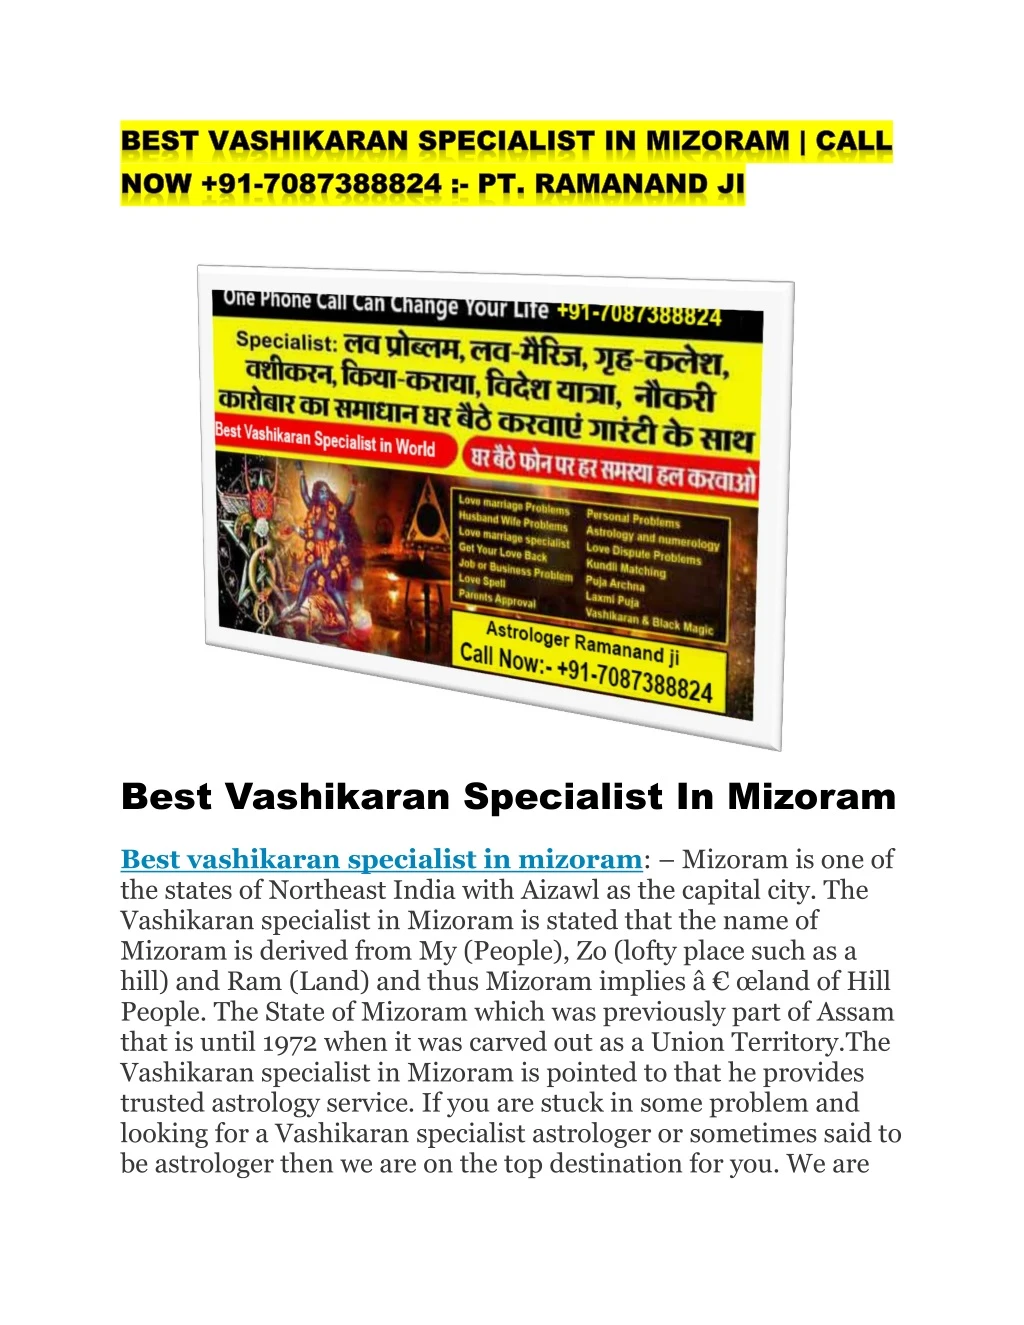 best vashikaran specialist in mizoram